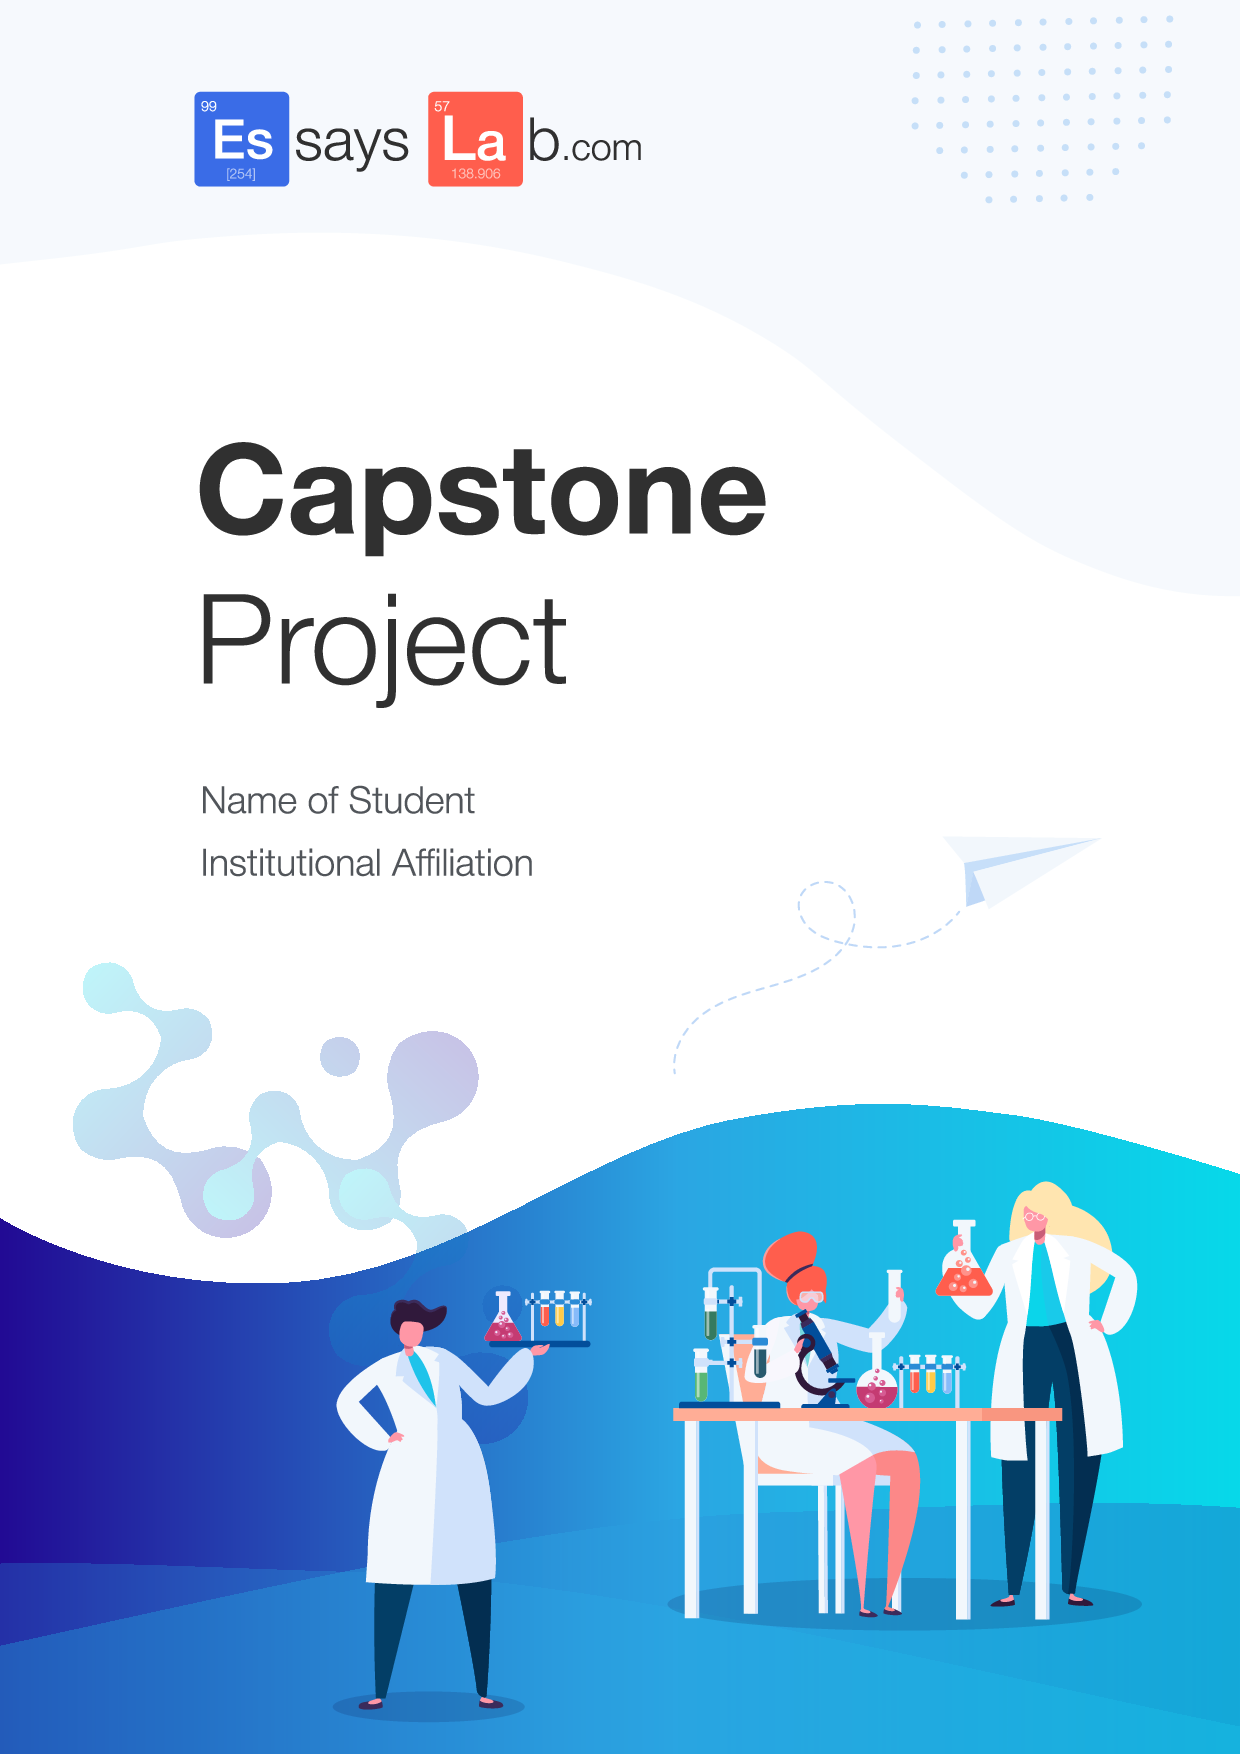 capstone project in college